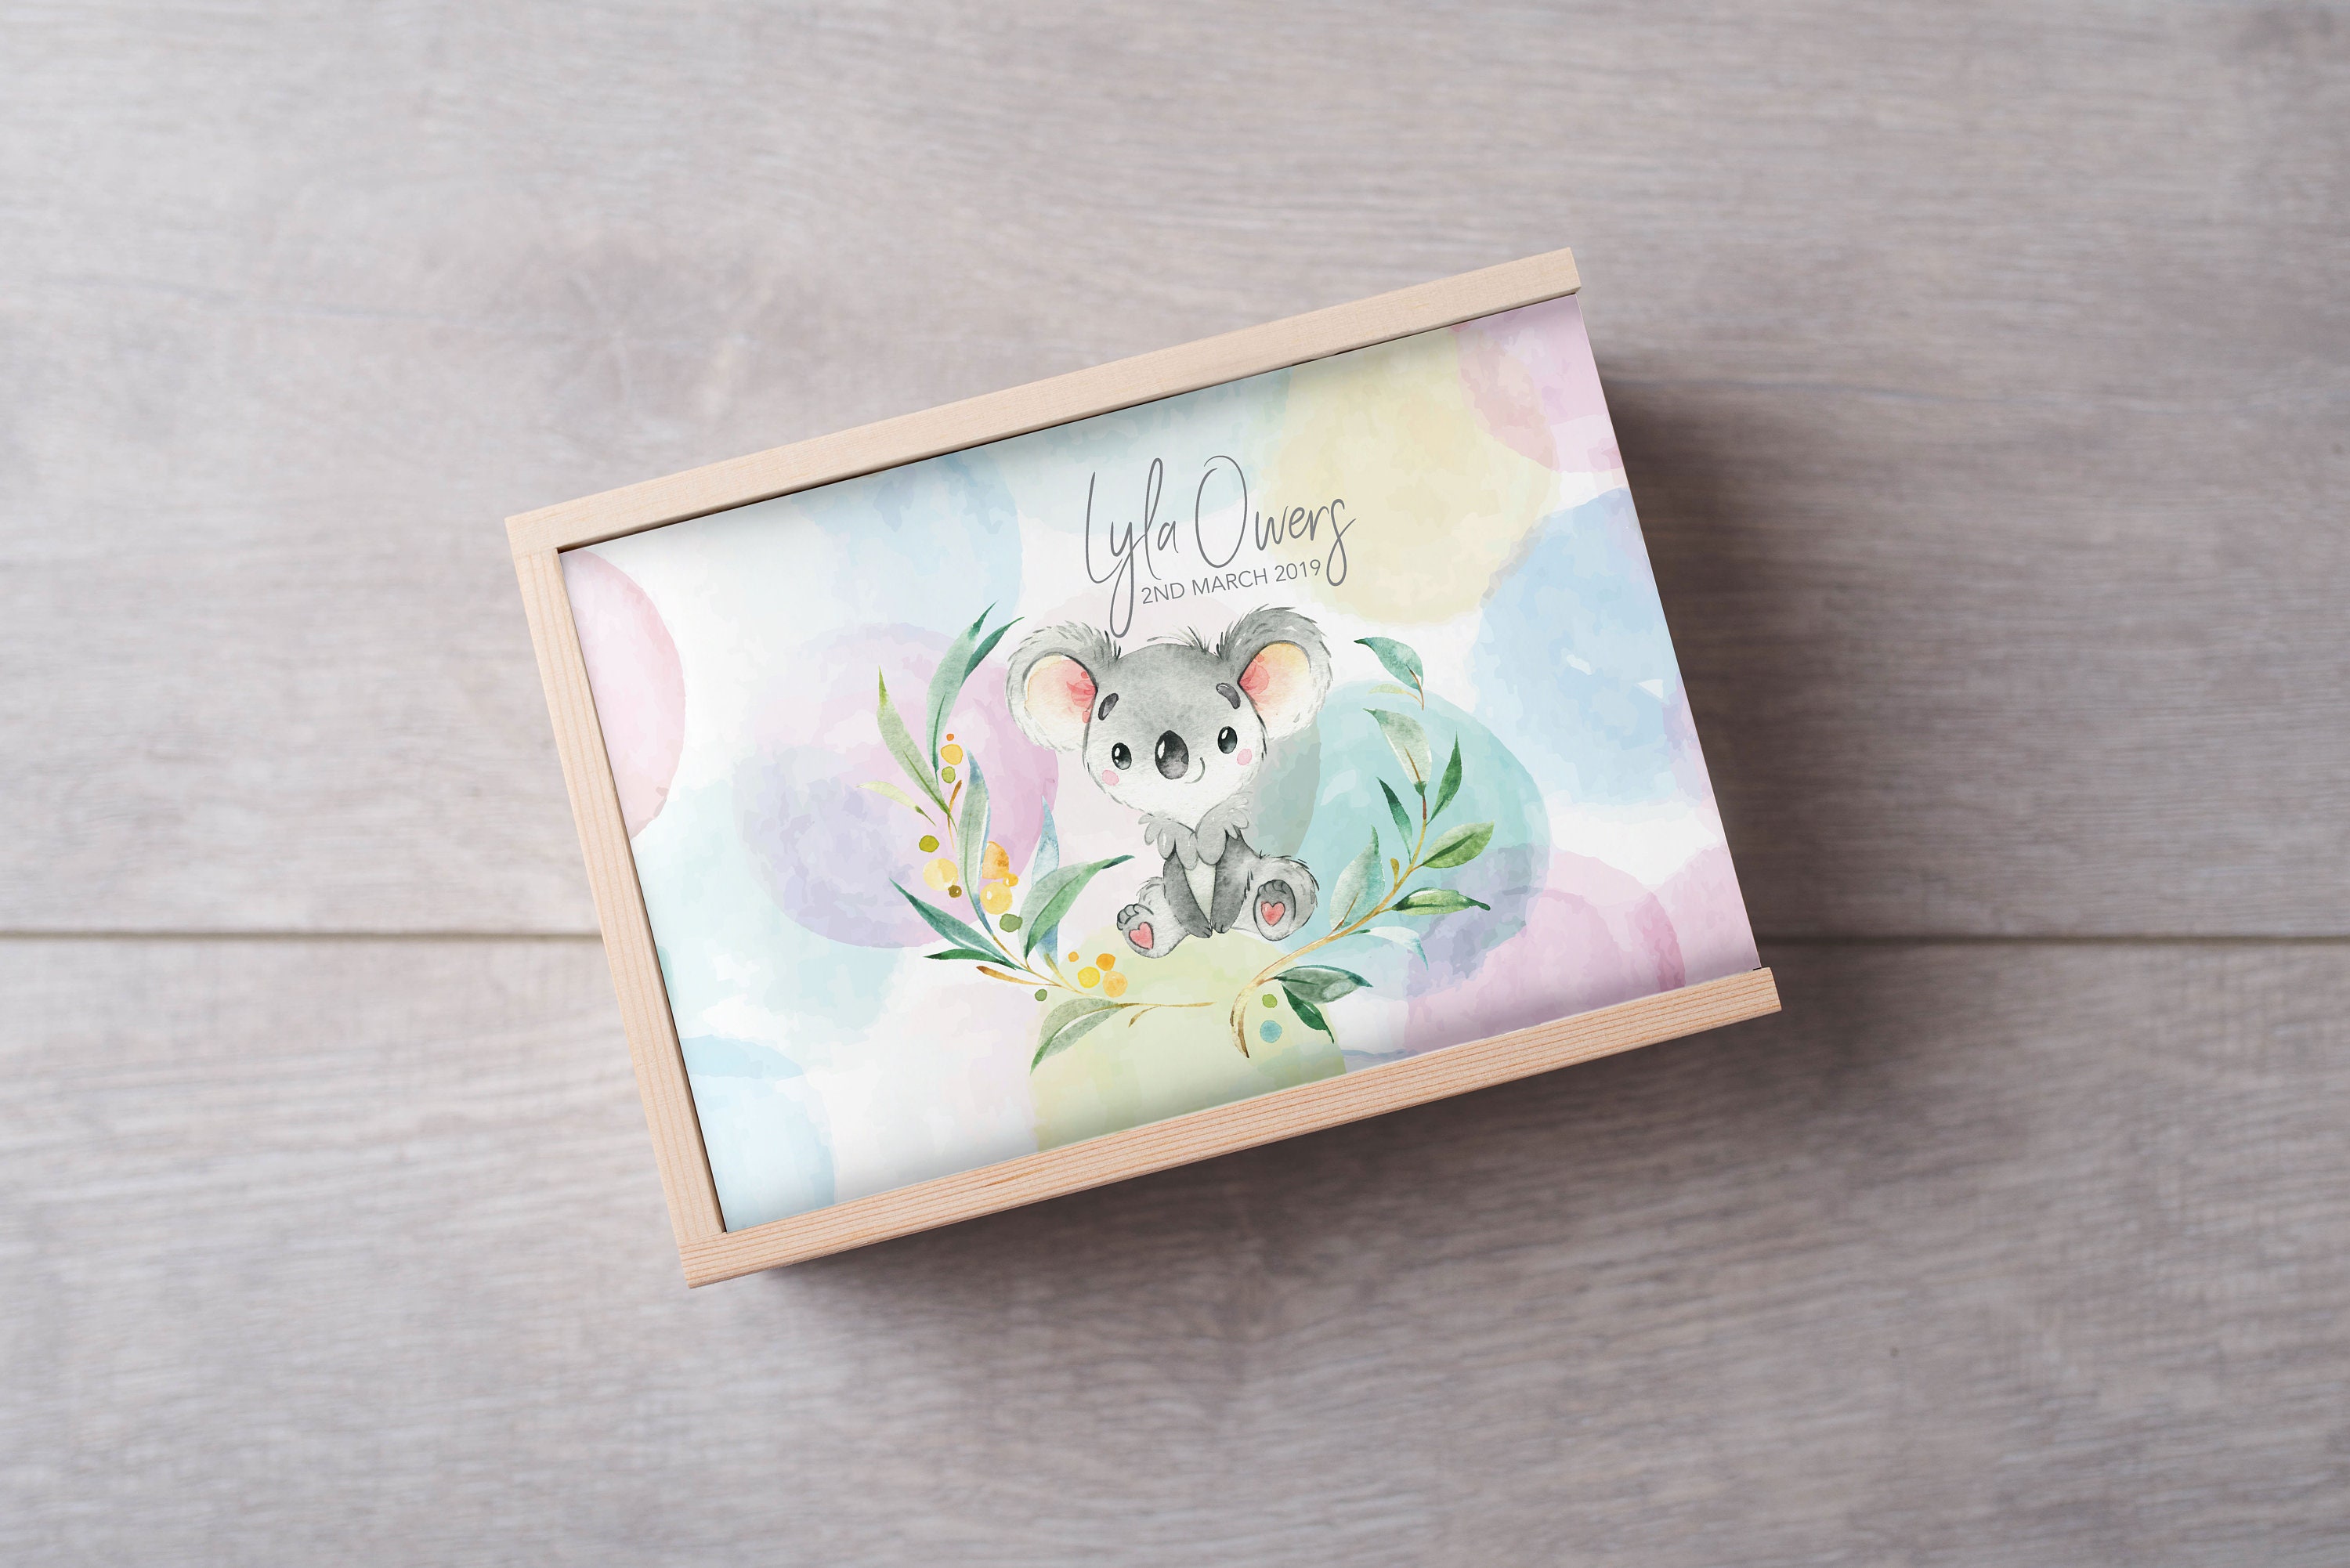 Cuddle Koala Baby Gift Box